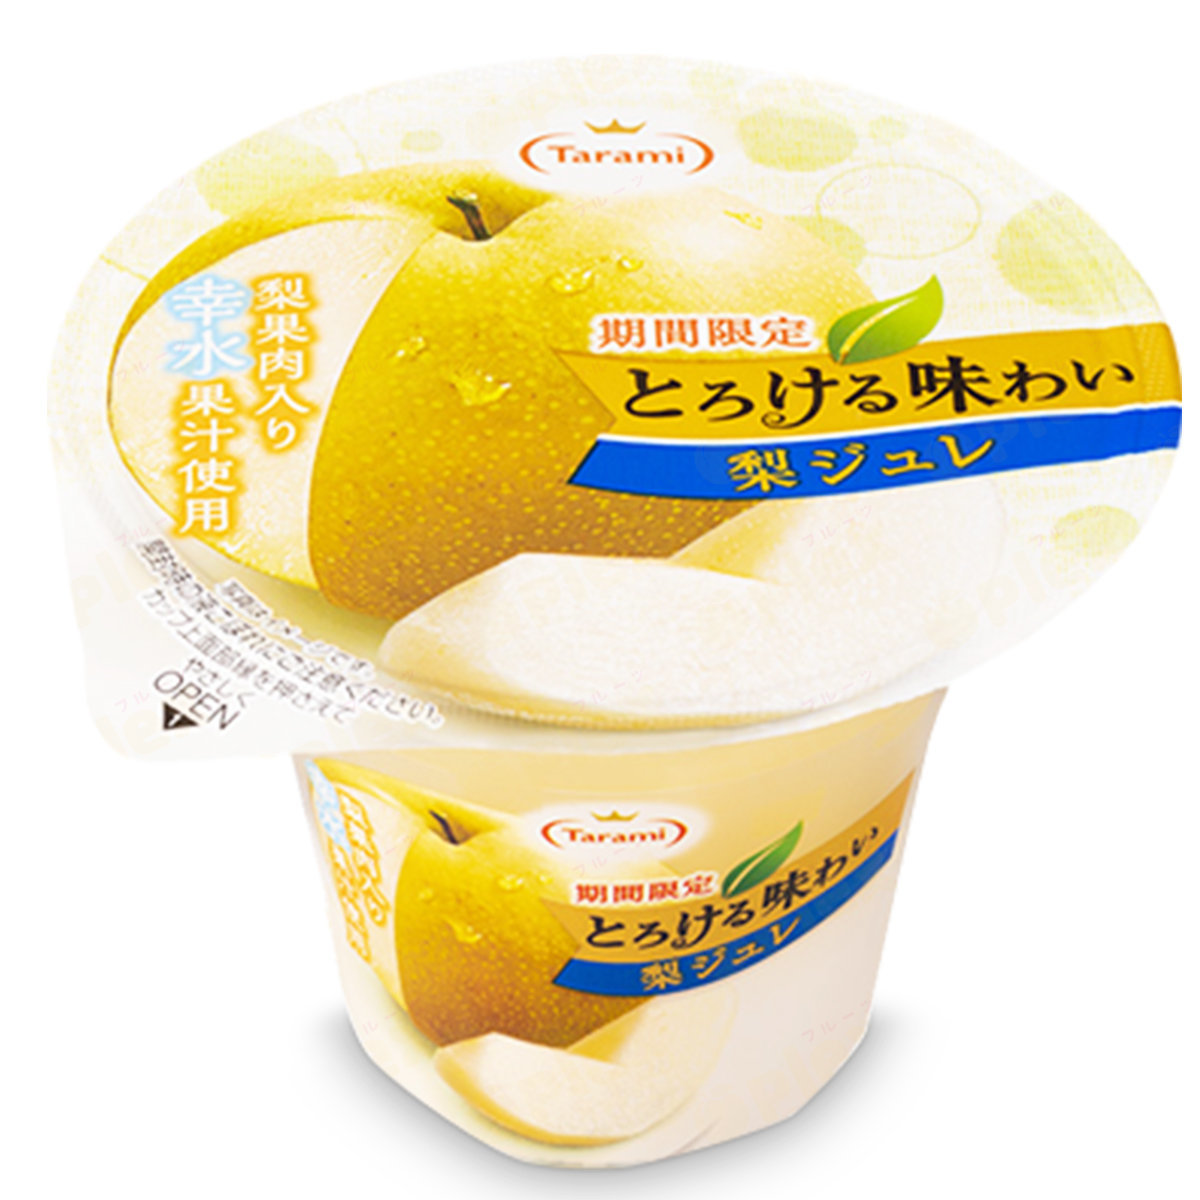 Tarami Tarami Melting Taste Series Fruit Jelly Pear 210g X 1pc Hktvmall Online Shopping